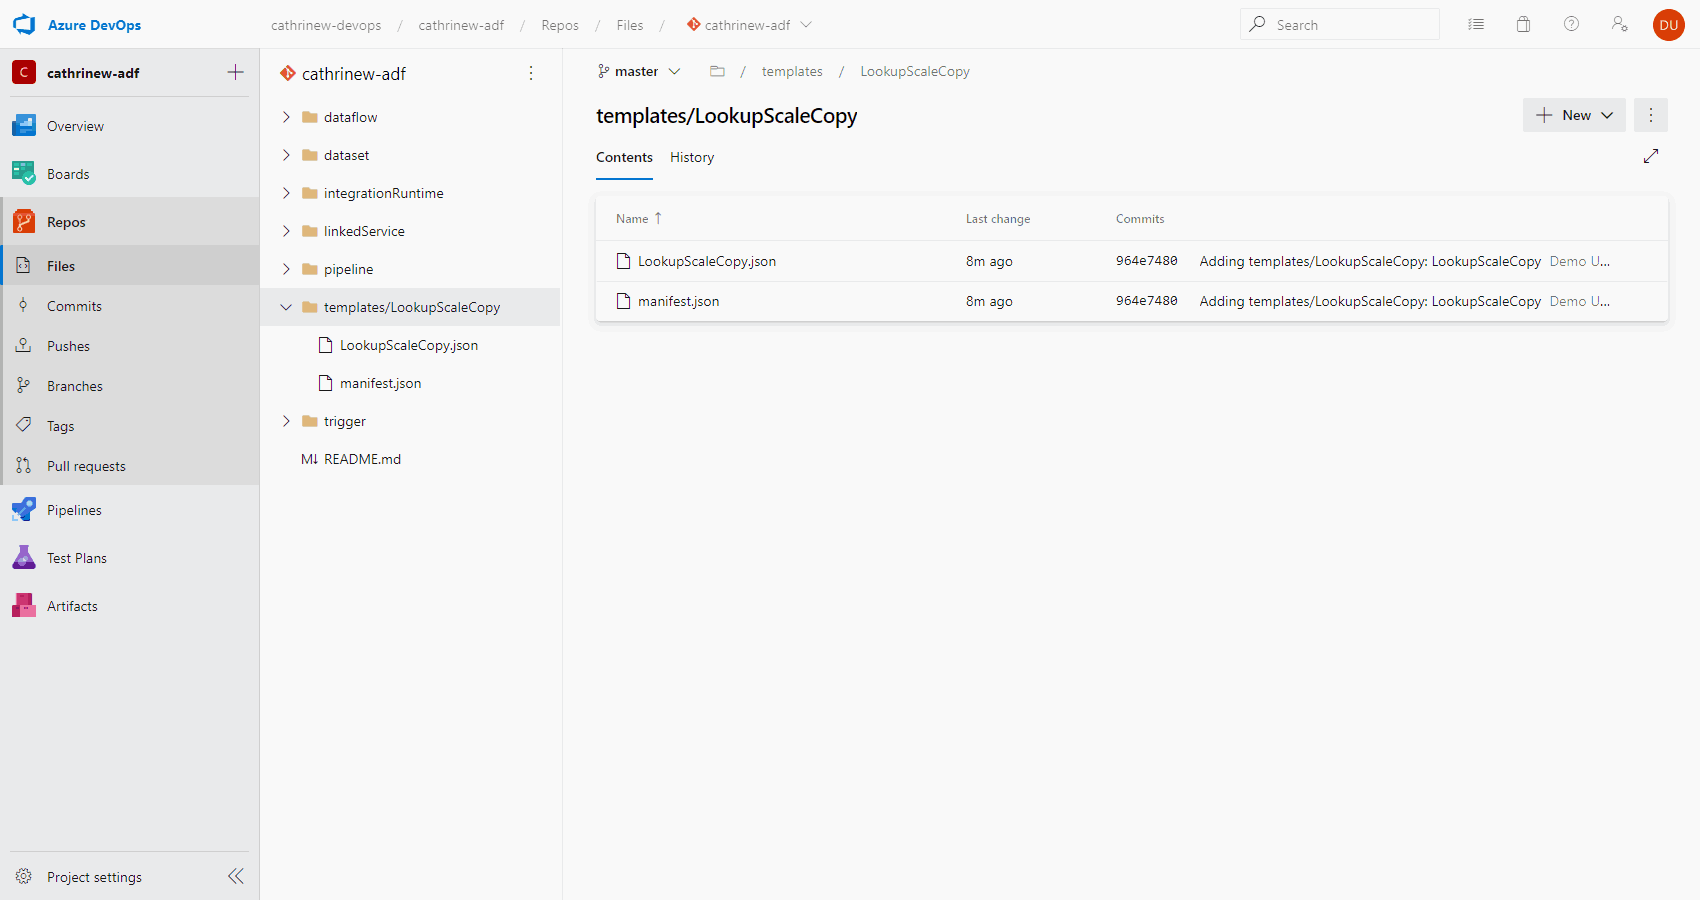 Screenshot of the Azure DevOps code repository, showing custom templates